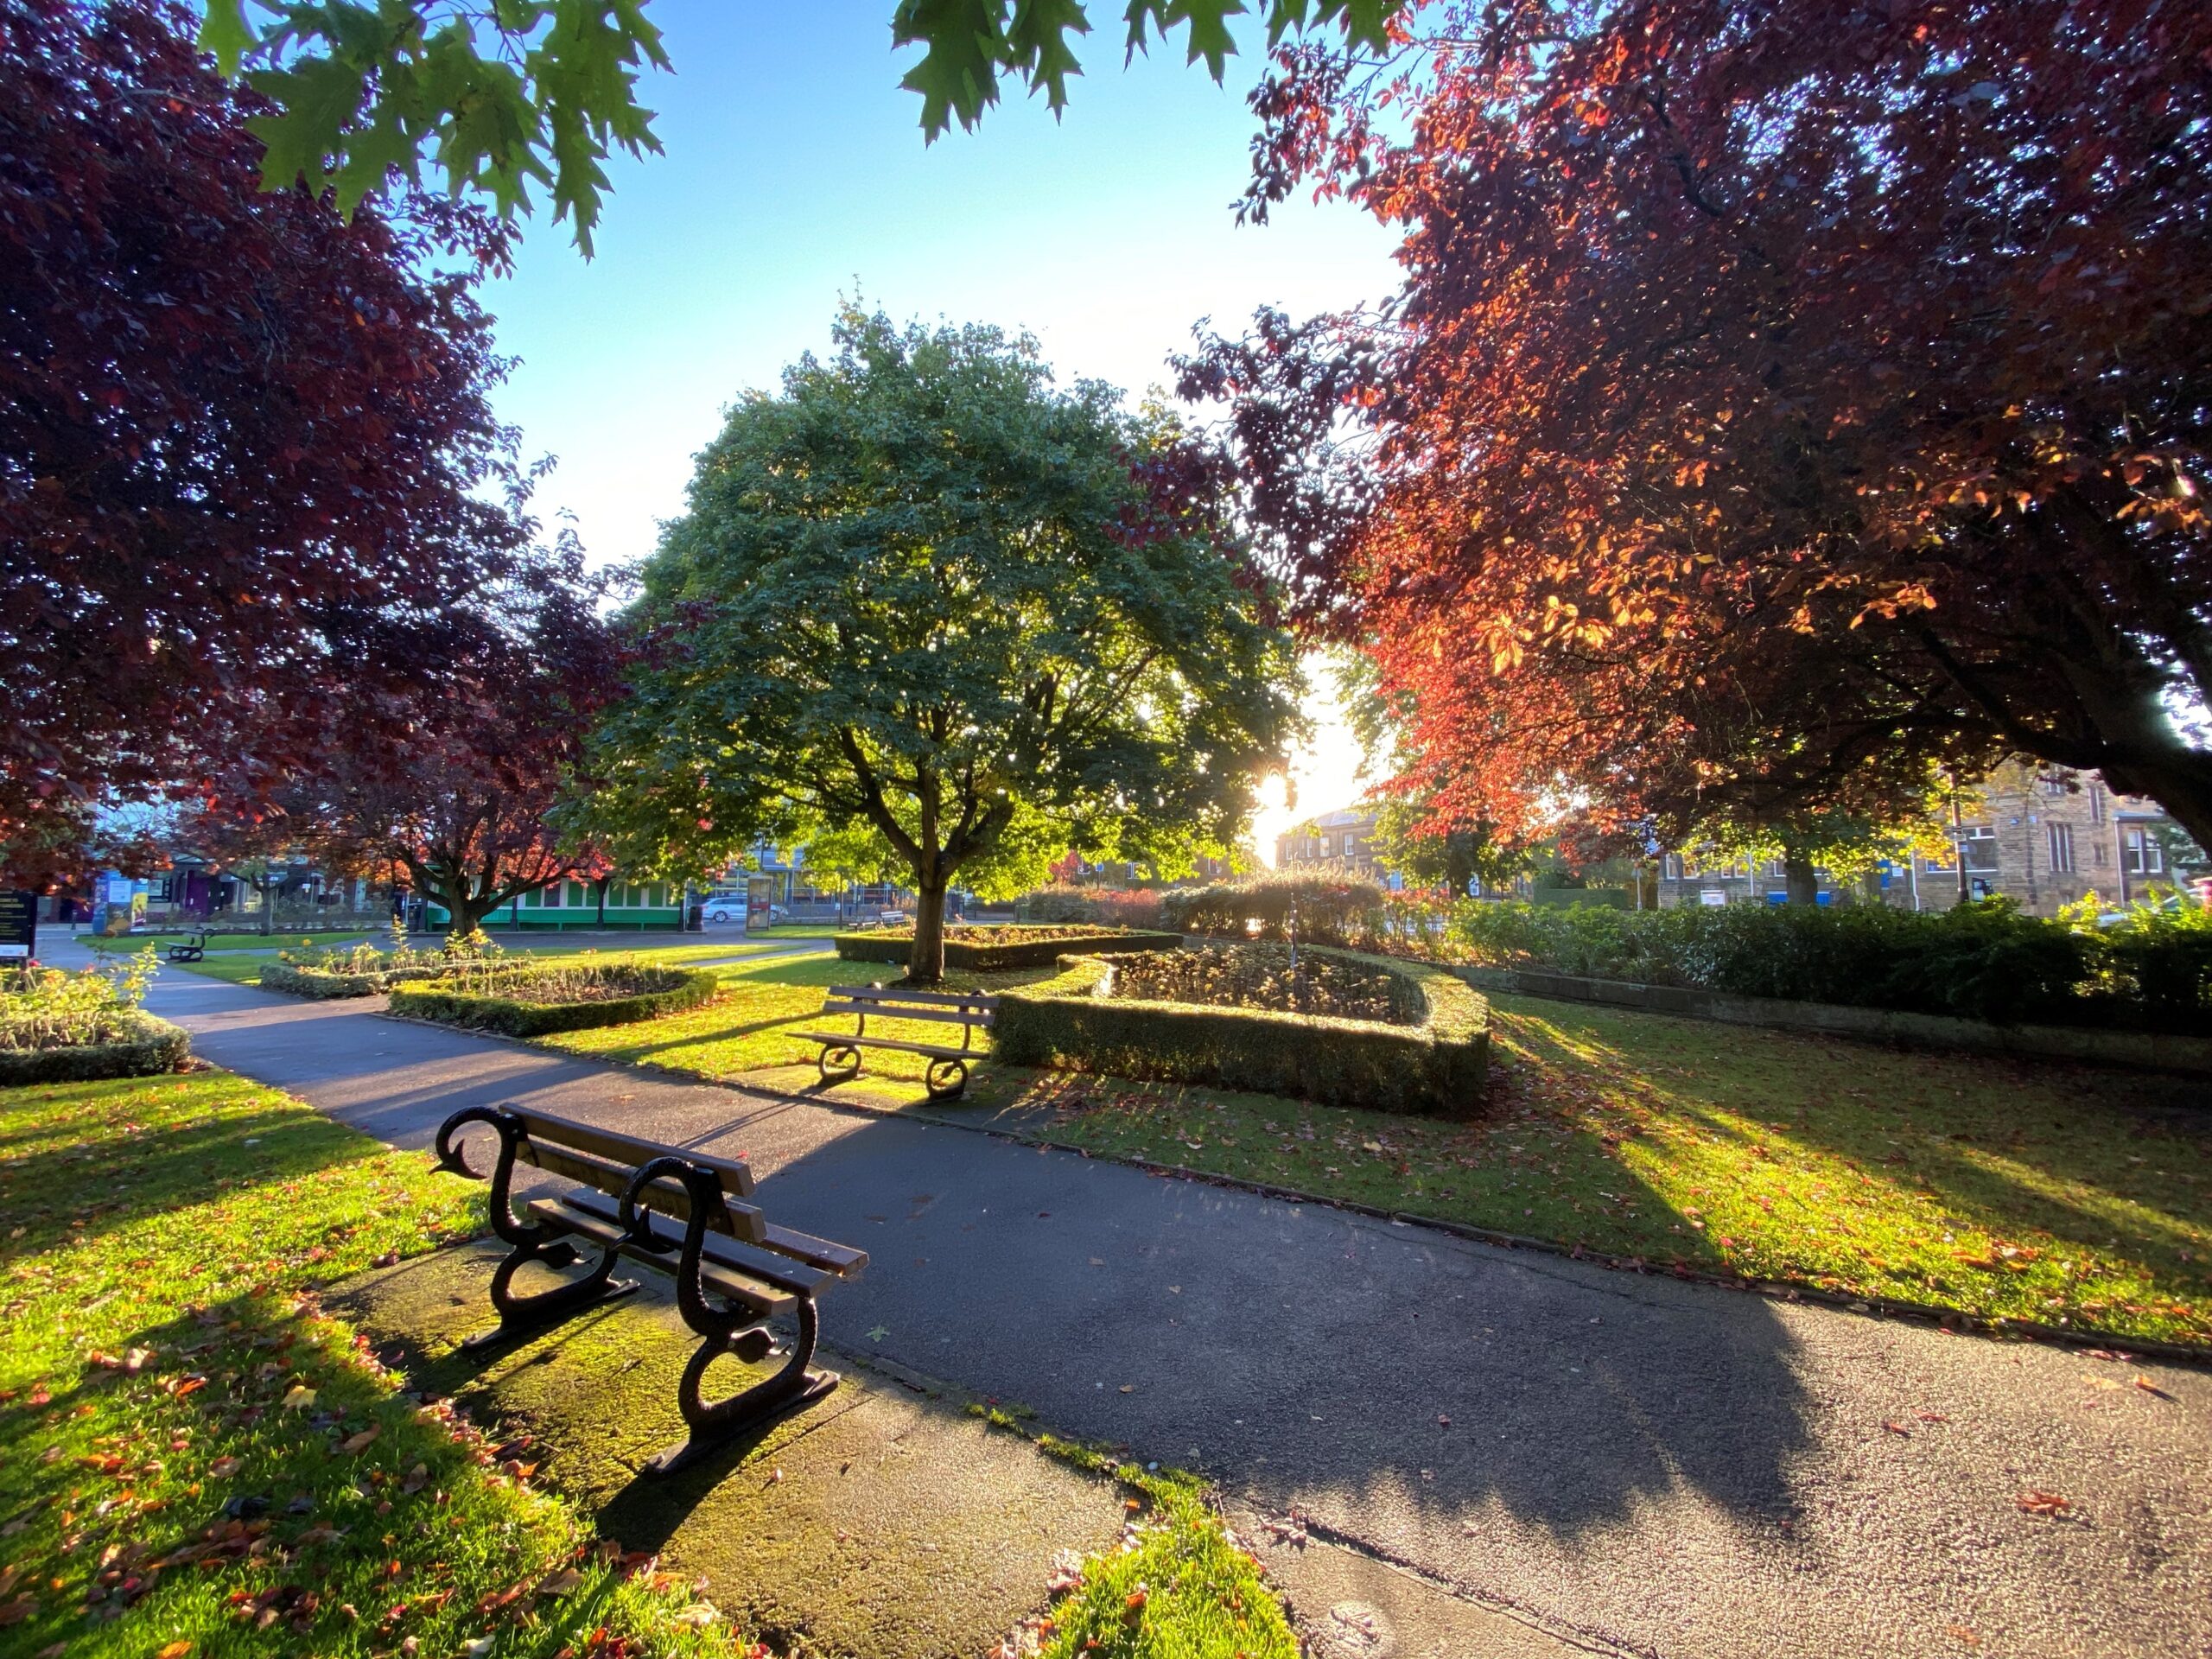 park bench and tree in Harrogate sunshine.